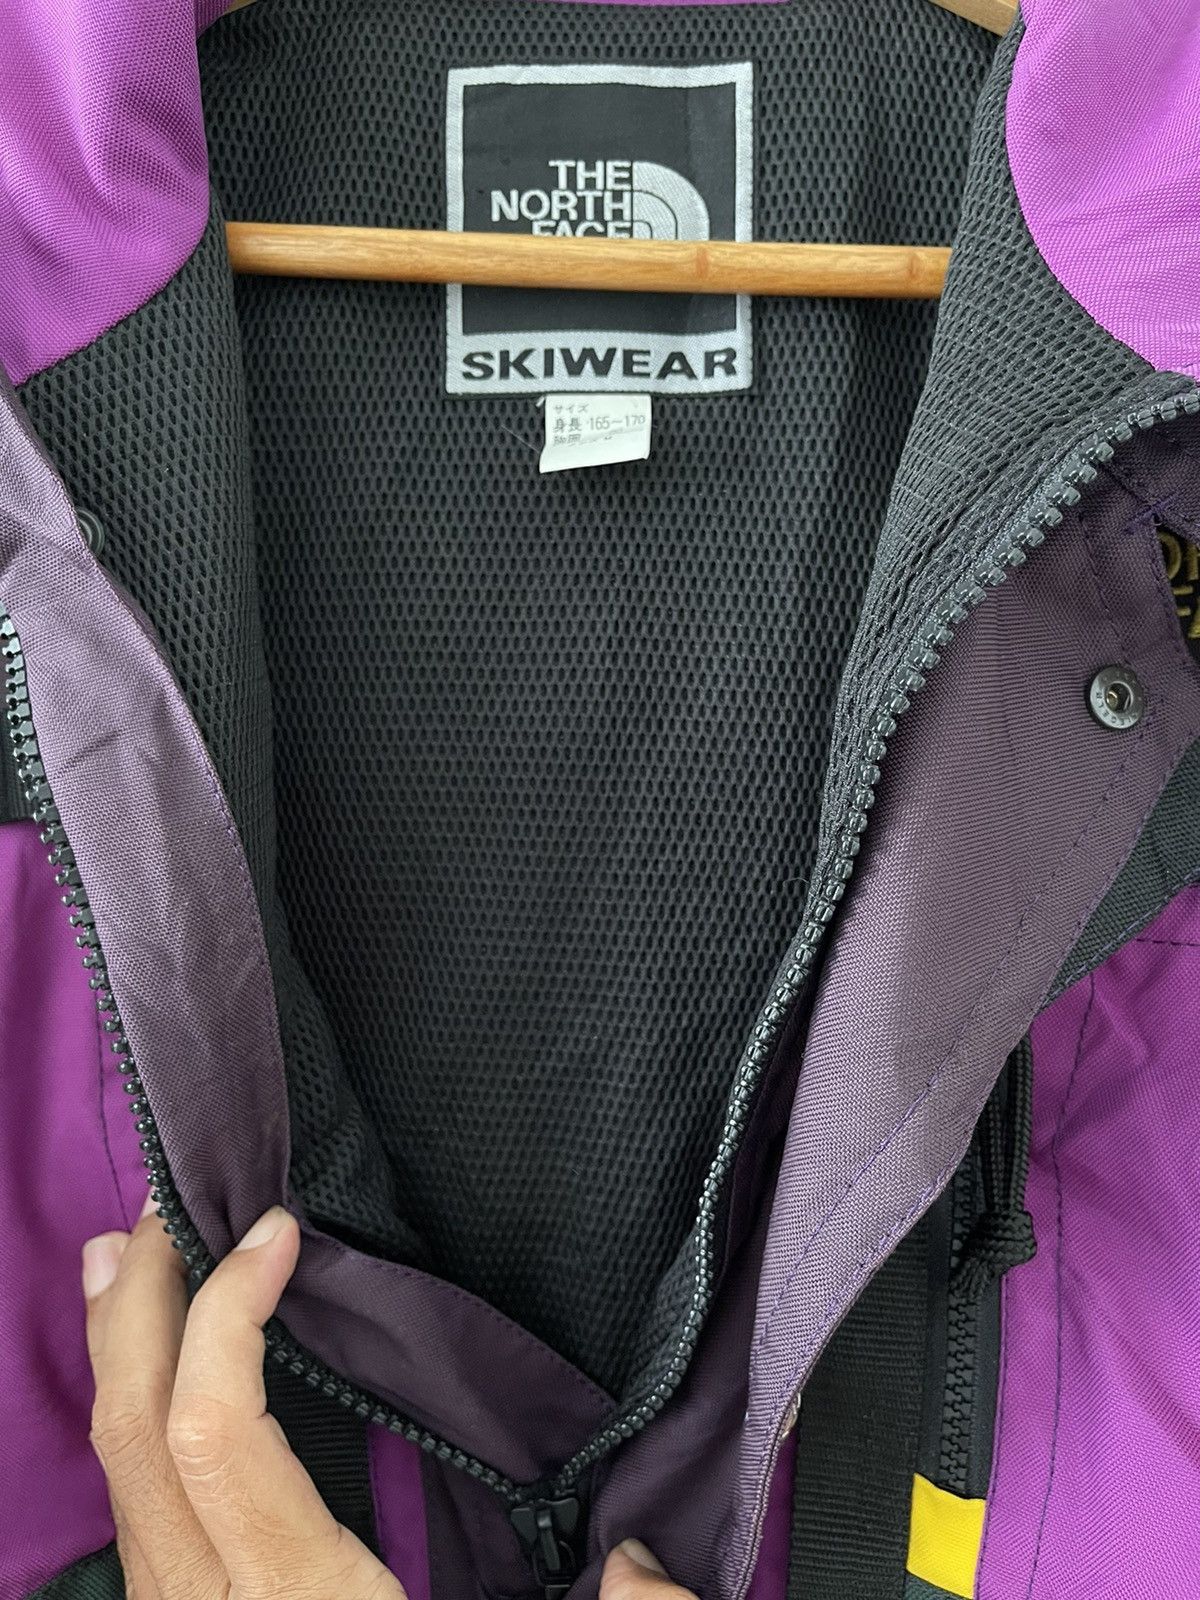 🔥FINAL🔥The North Face SkiWear Multicolour Color Block Jacket - 12